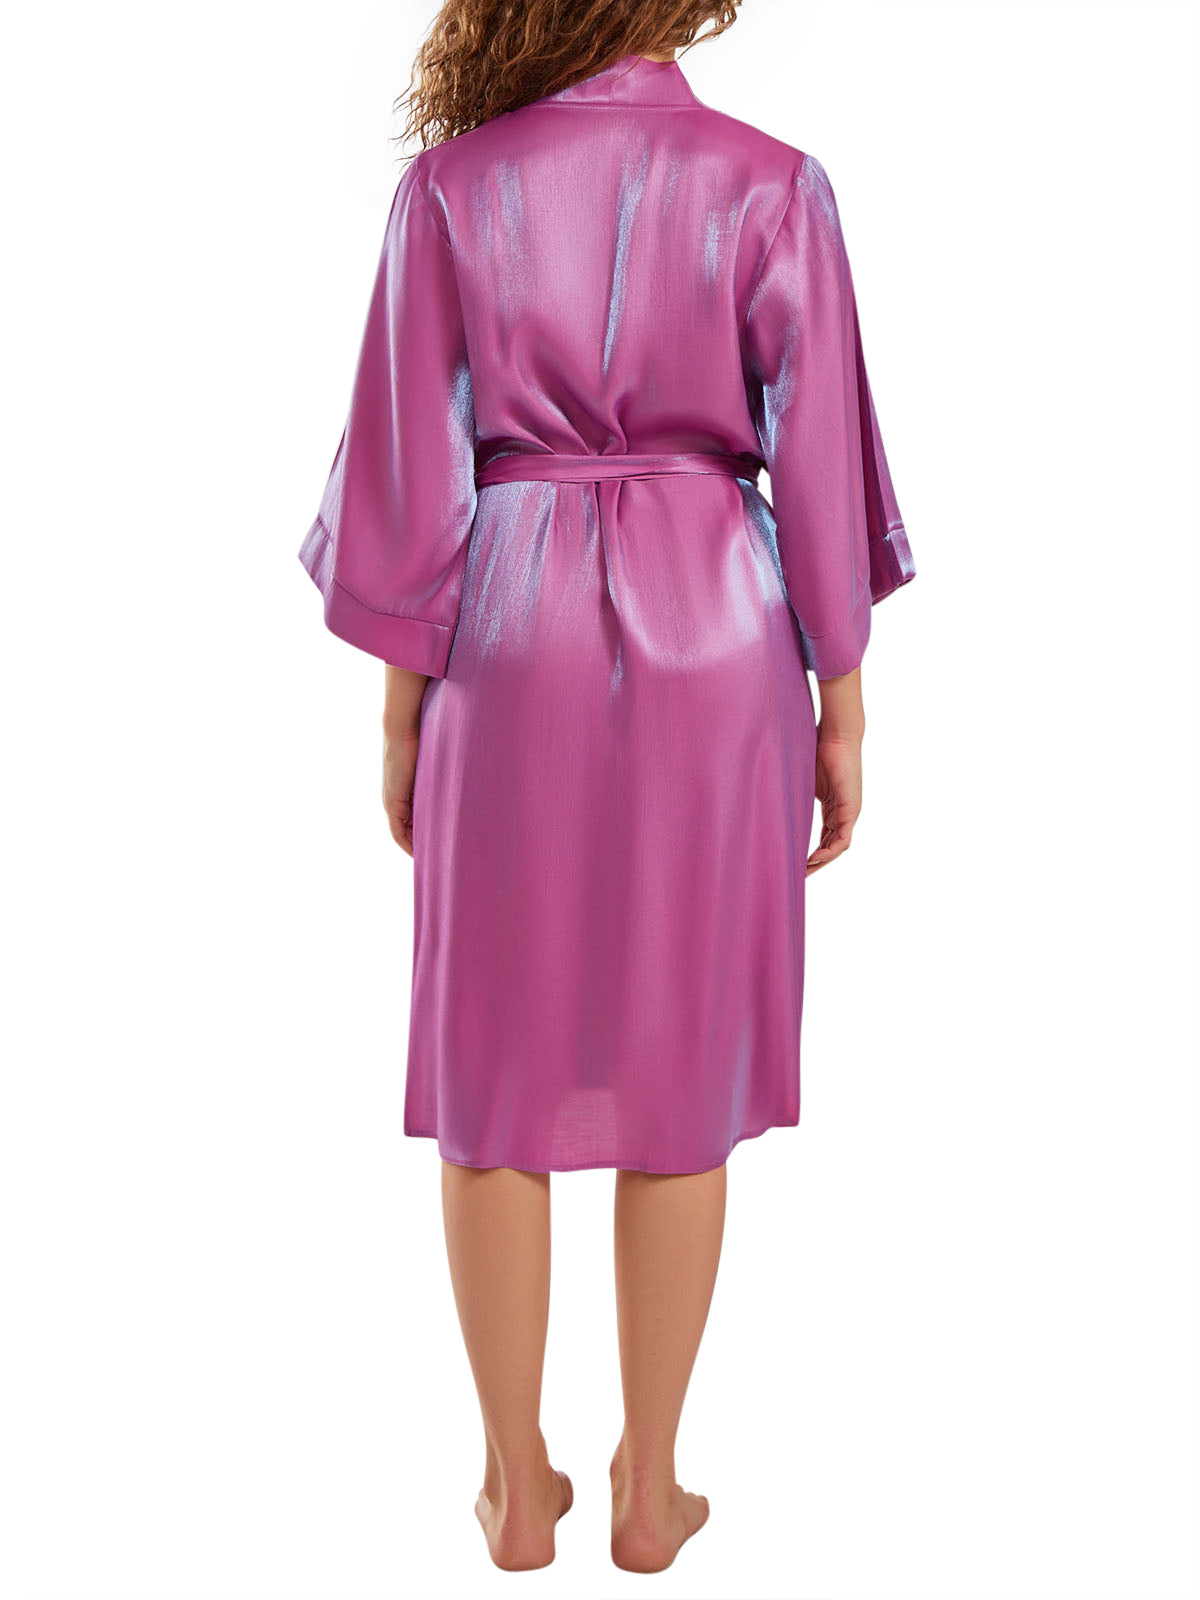 iCollection Robe Women's Janet Robe Loungewear